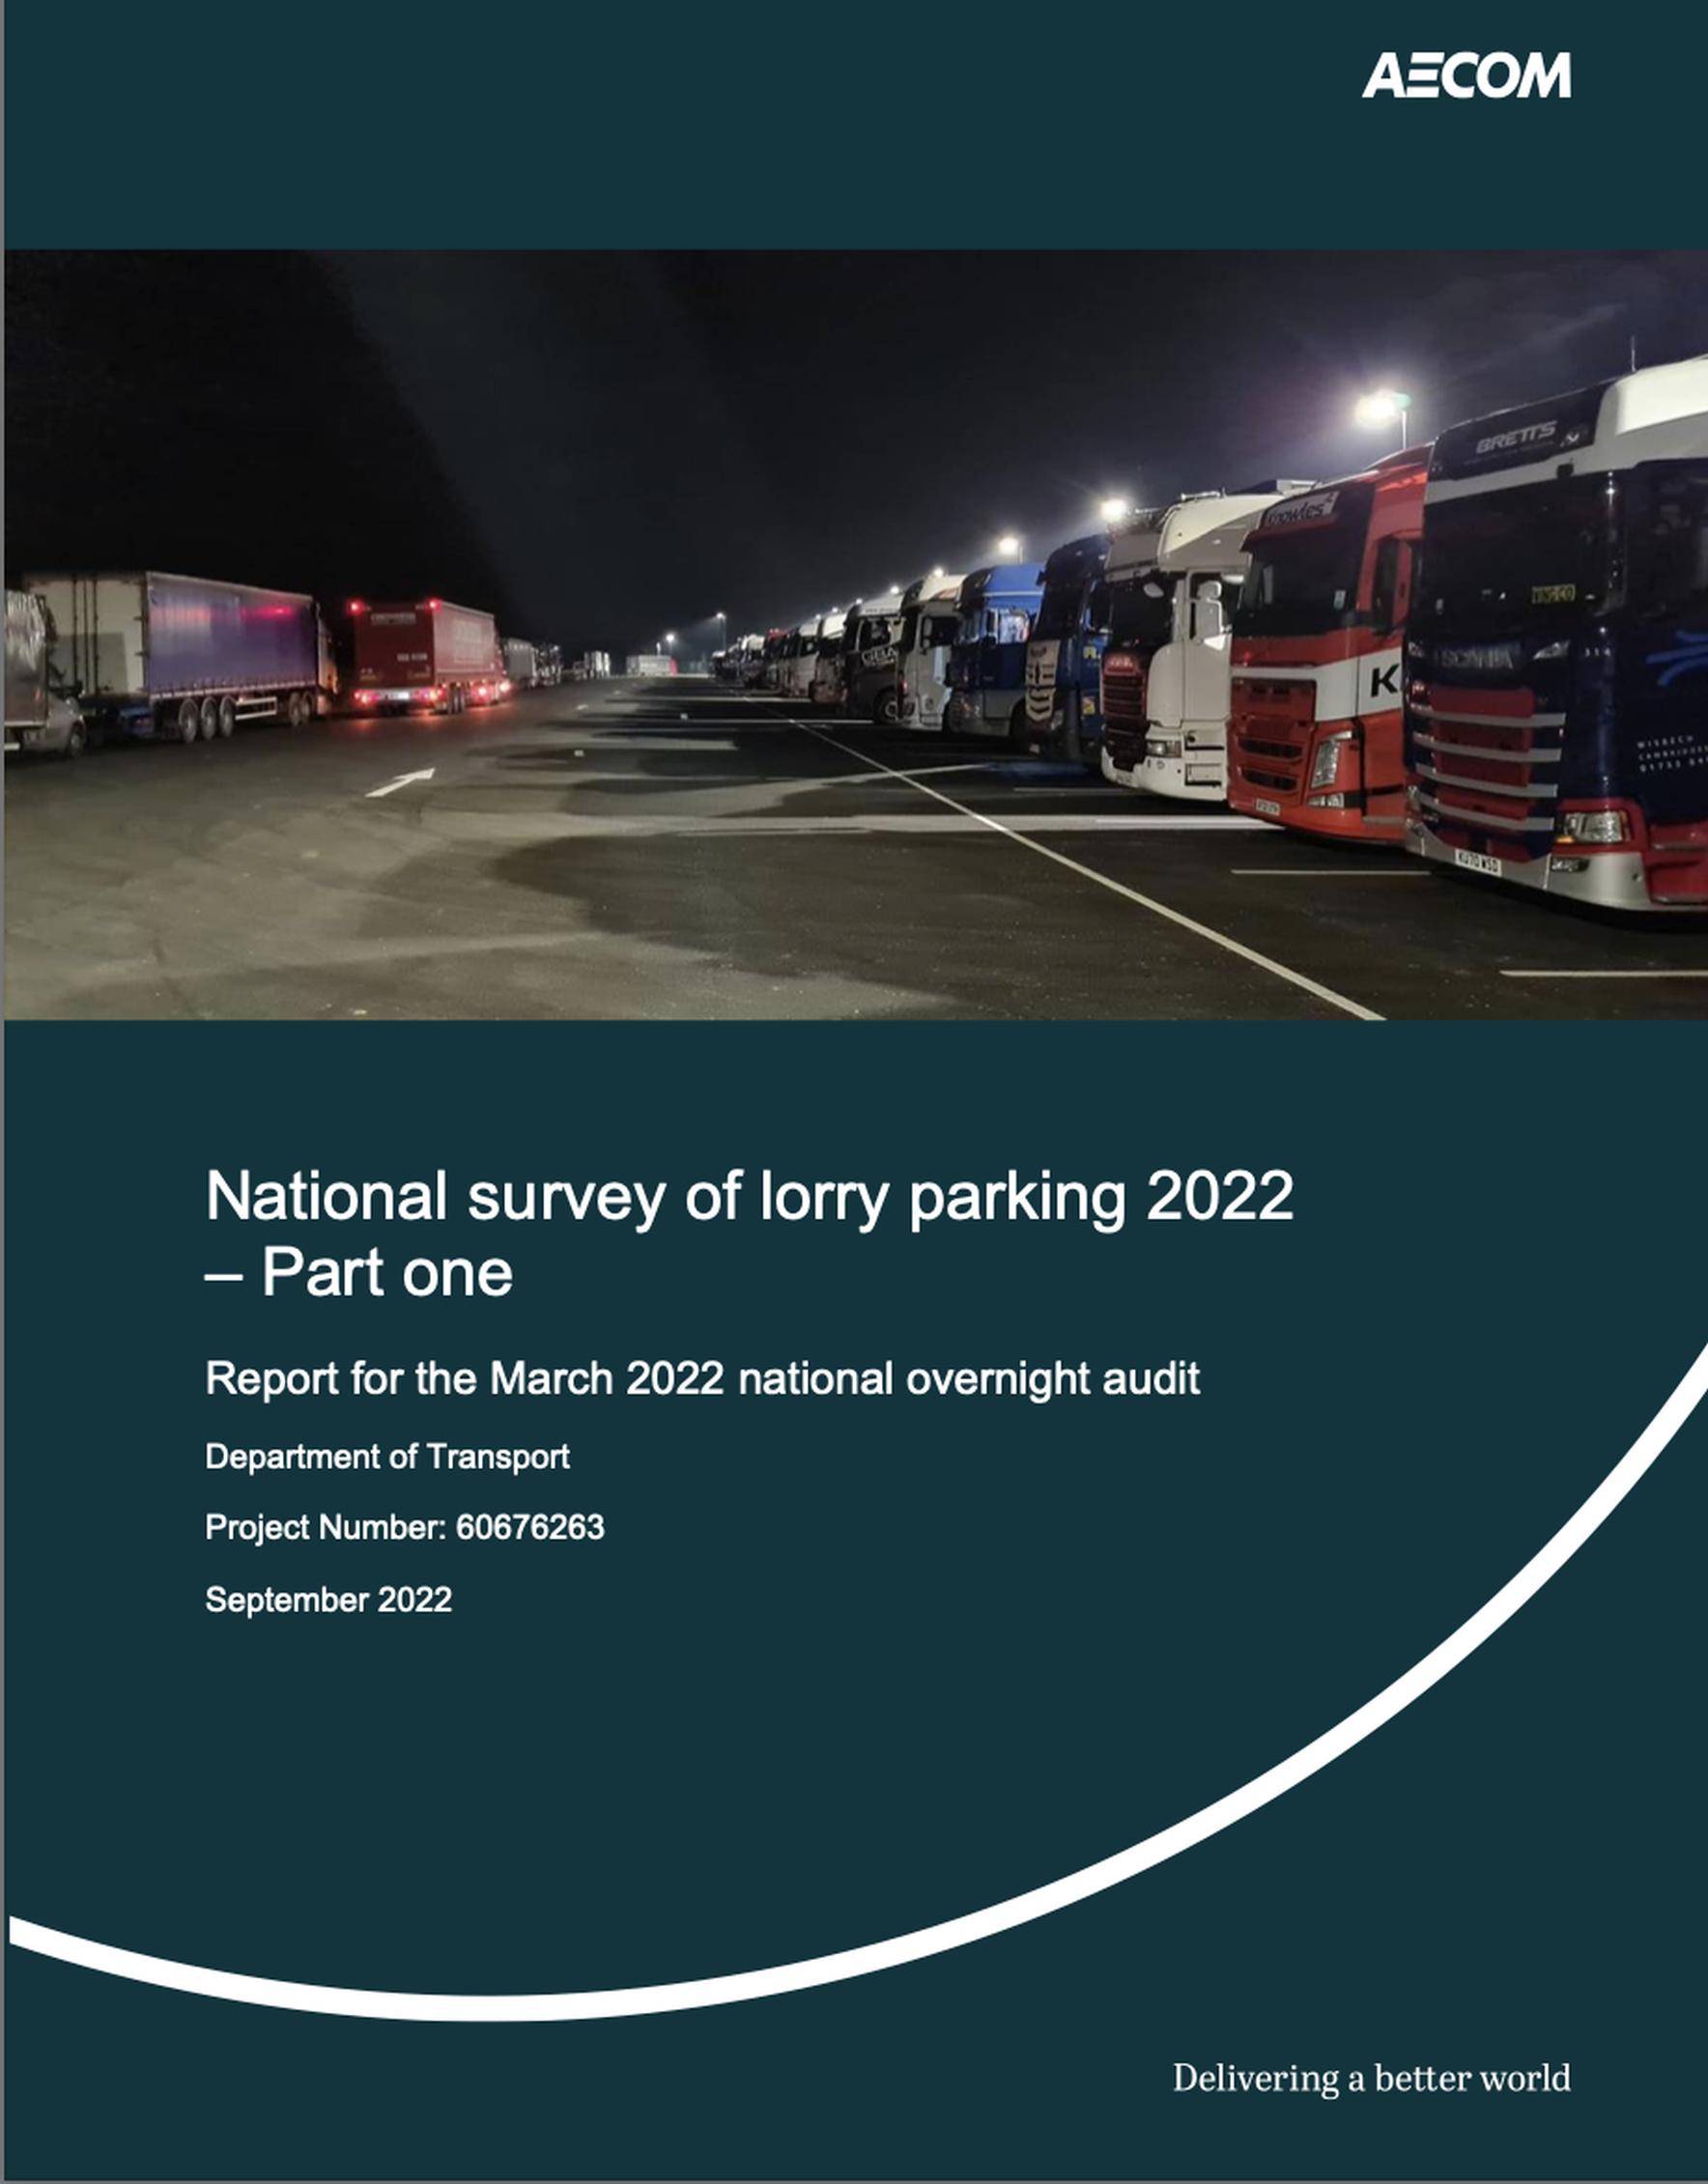 Lorry parking shortfall worsens in face of rising demand